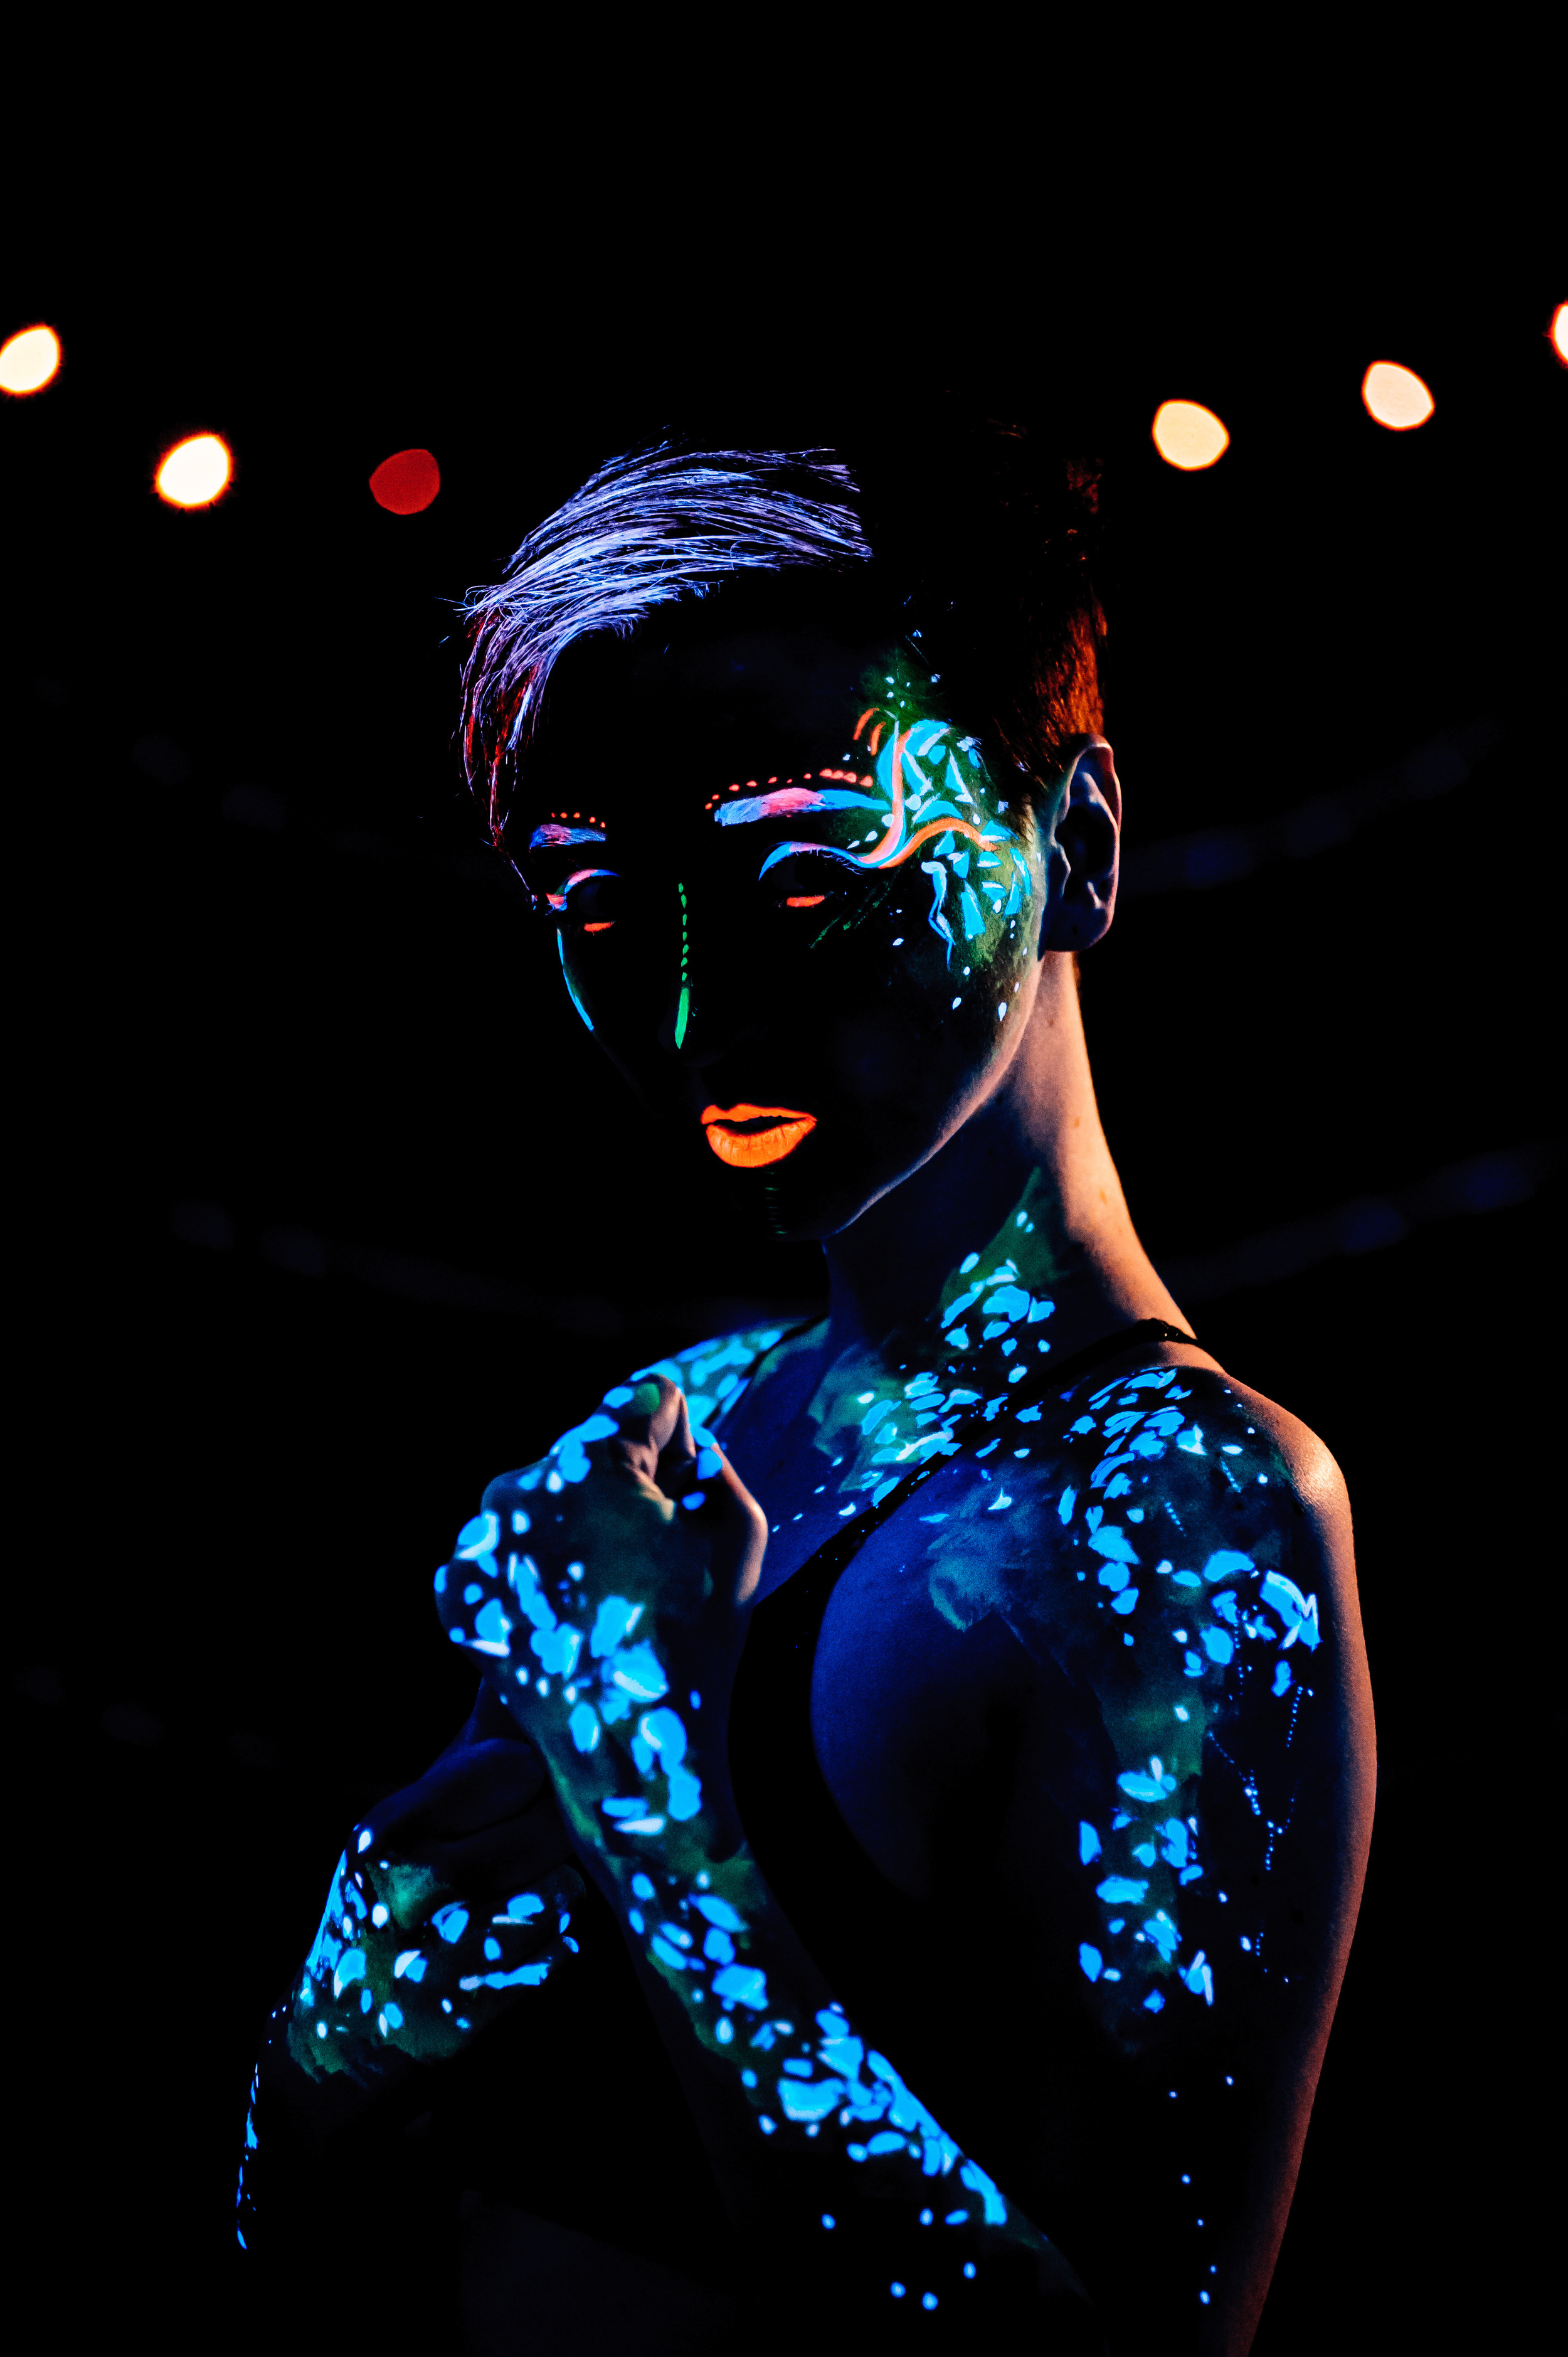 Glow in the Dark Body Paint, Smithsonian Photo Contest